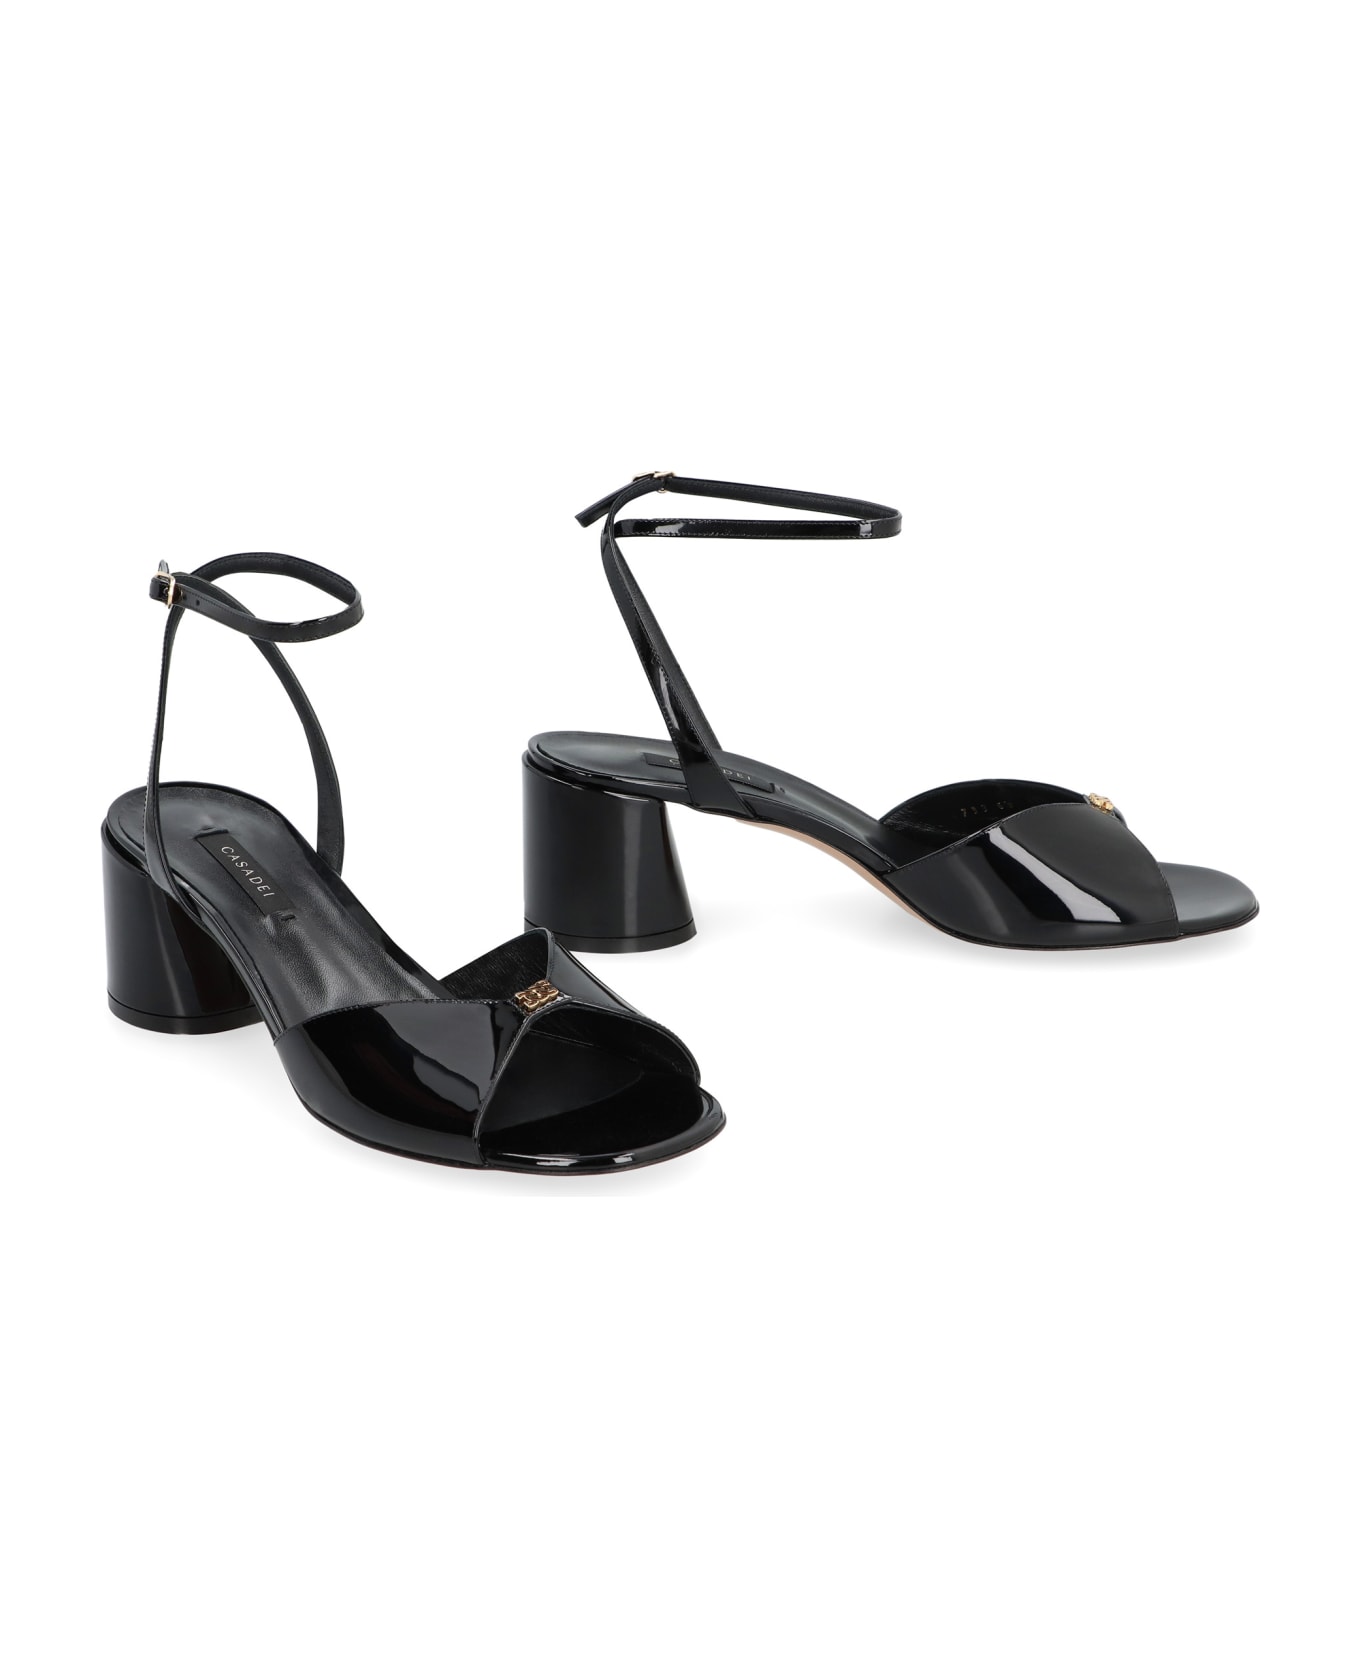 Casadei Tiffany Patent Leather Sandals - black サンダル